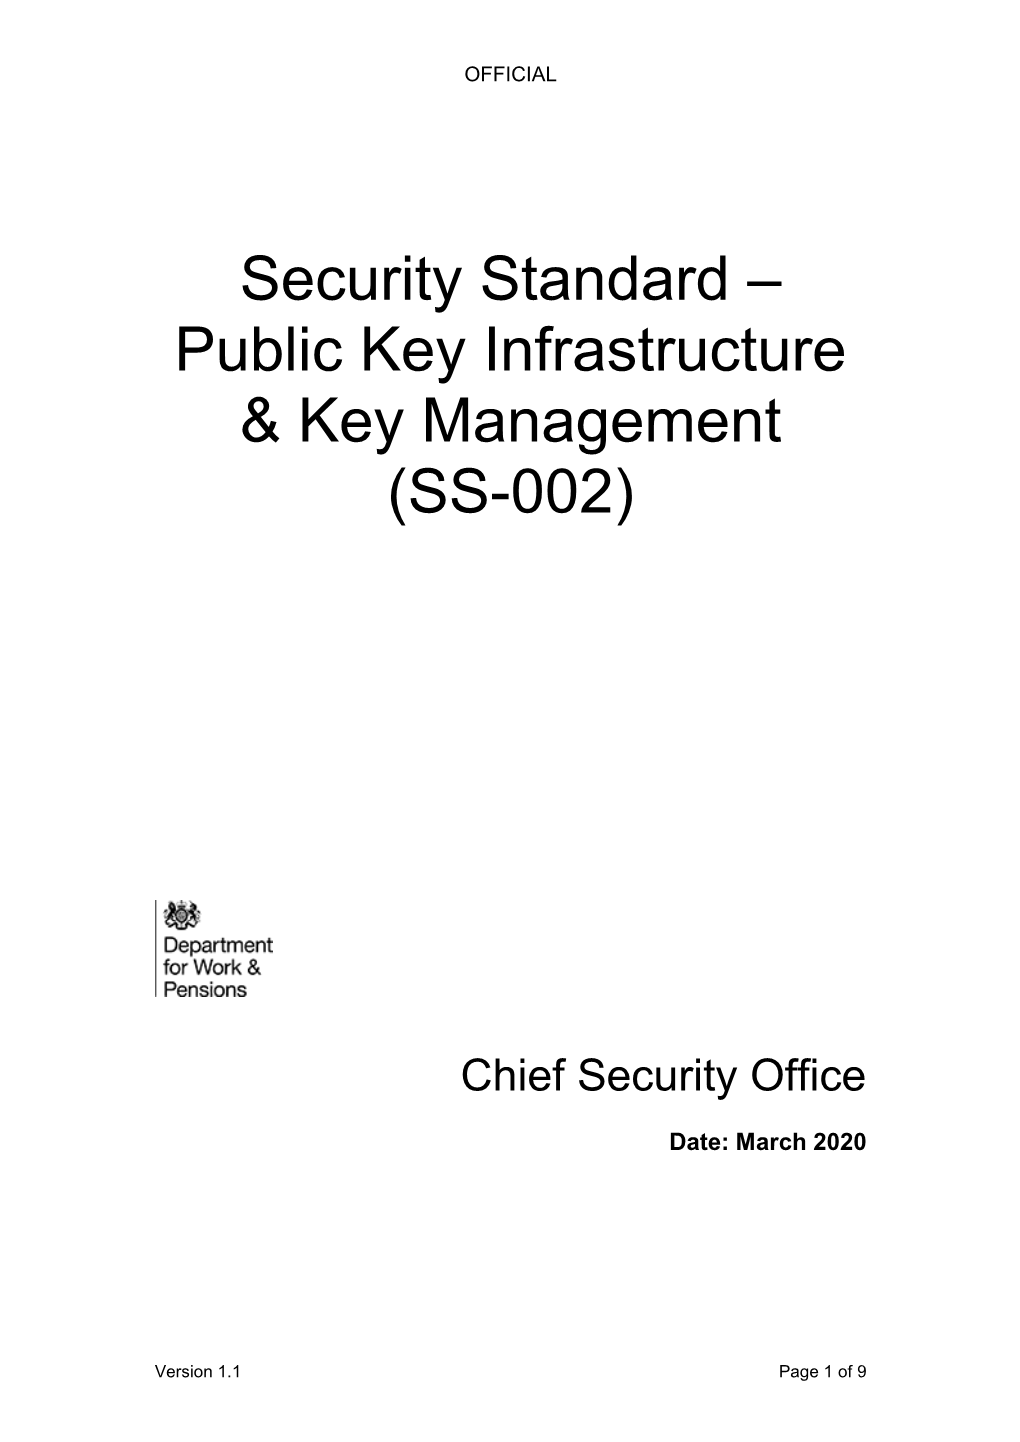 Security Standard SS-002: Public Key Infrastructure & Key Management